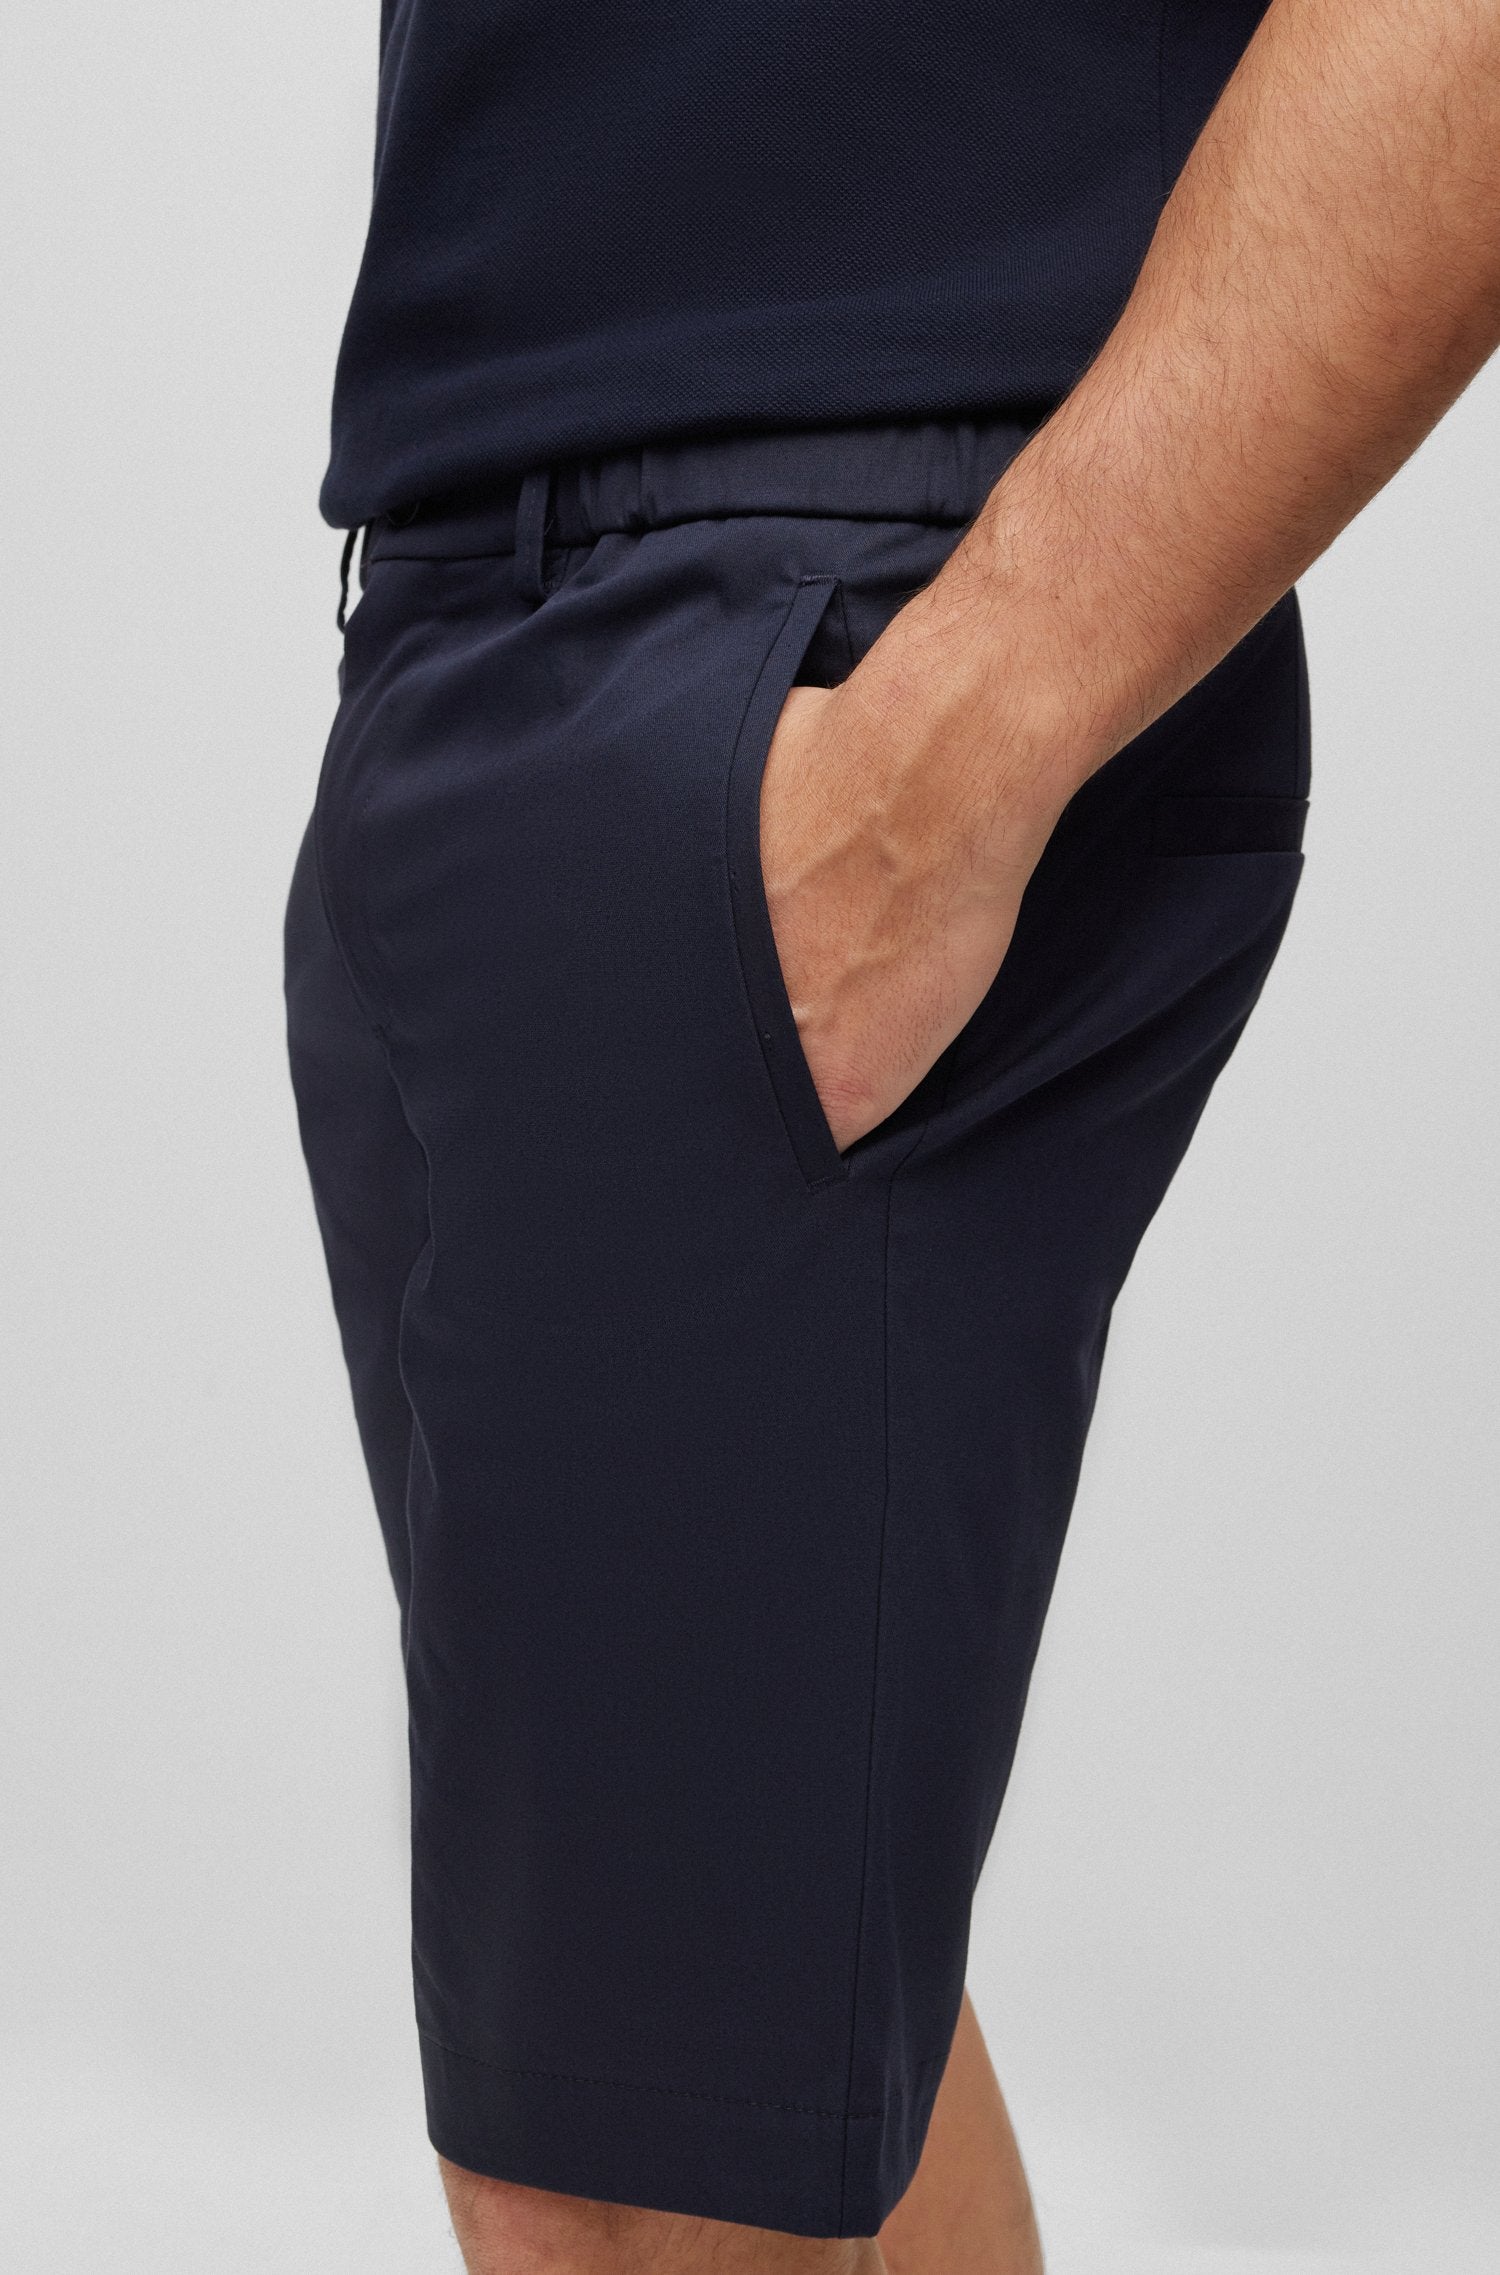 BOSS - Slim-fit shorts in an organic-cotton blend